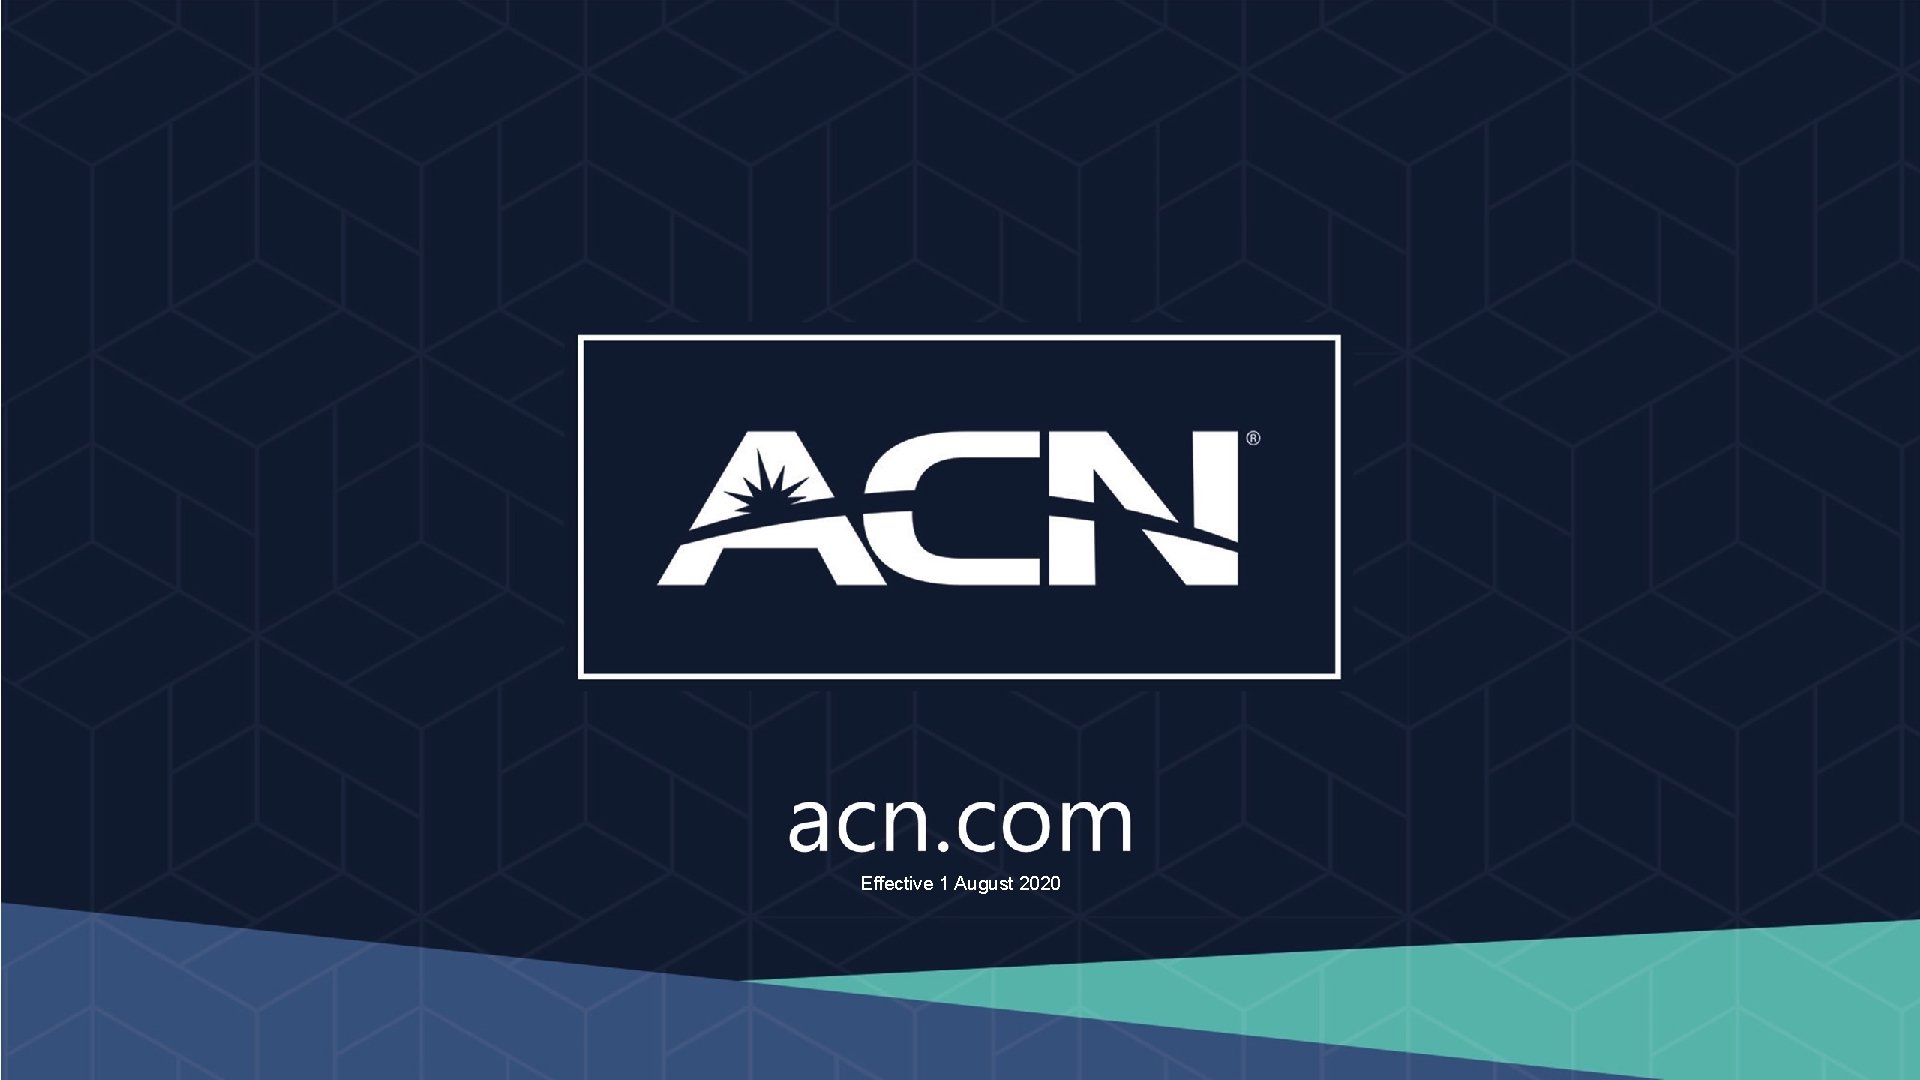 acn. com Effective 1 August 2020 